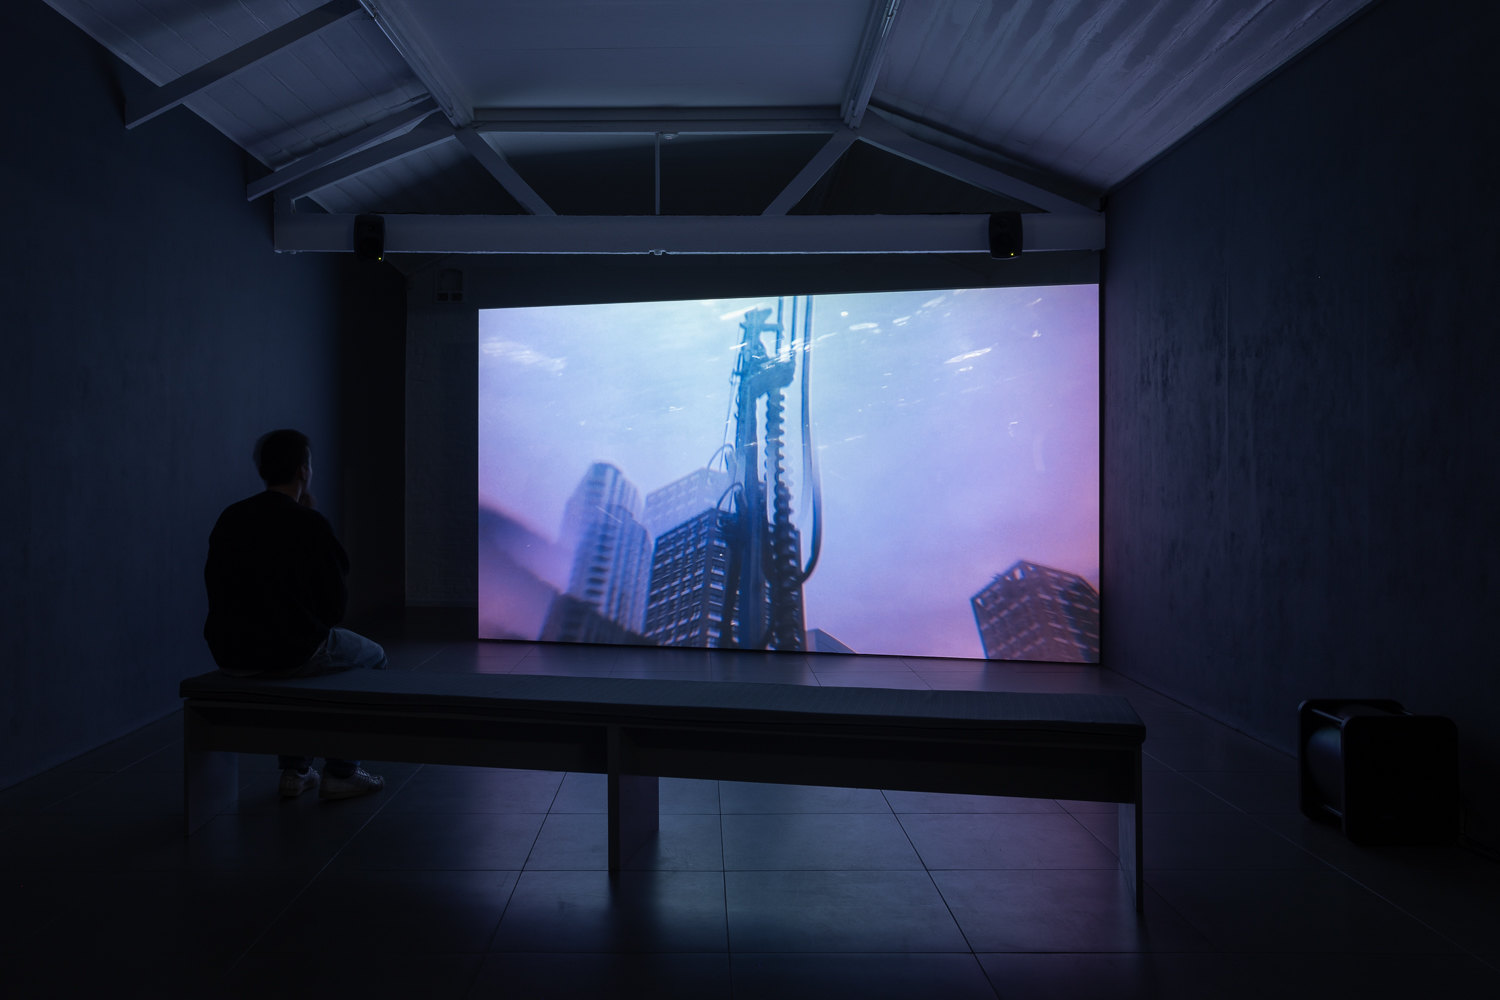 Felix Melia, 'Money for Nothing', 2021, installation view, single channel, digital video, sound, 34:59 (+1:00 break)